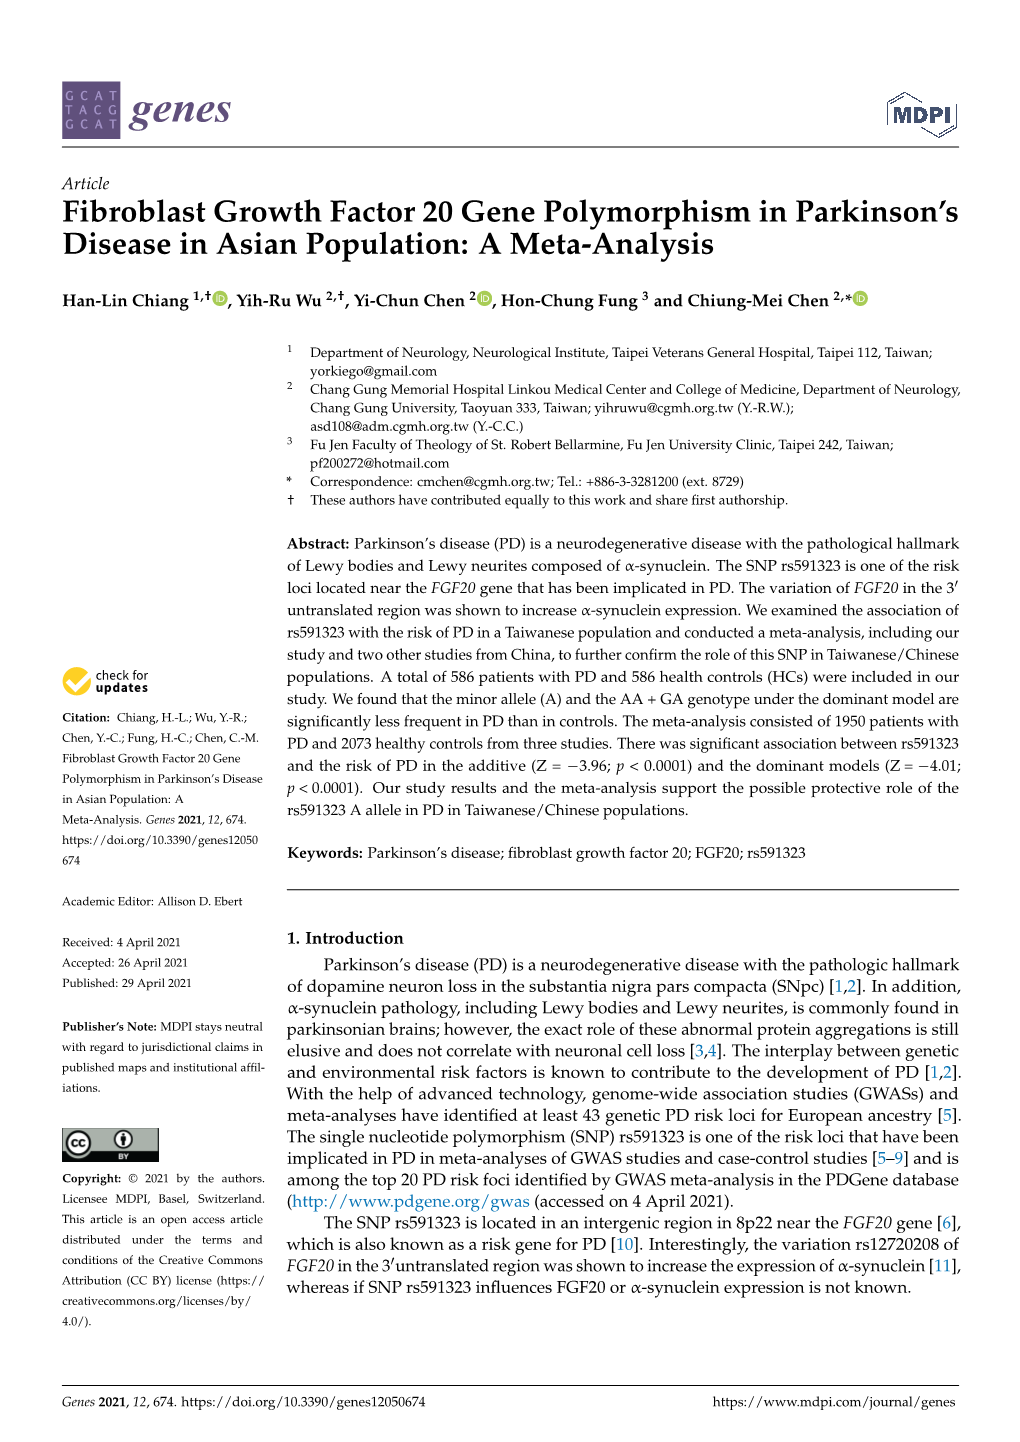 Fibroblast Growth Factor 20 Gene Polymorphism in Parkinson’S Disease in Asian Population: a Meta-Analysis